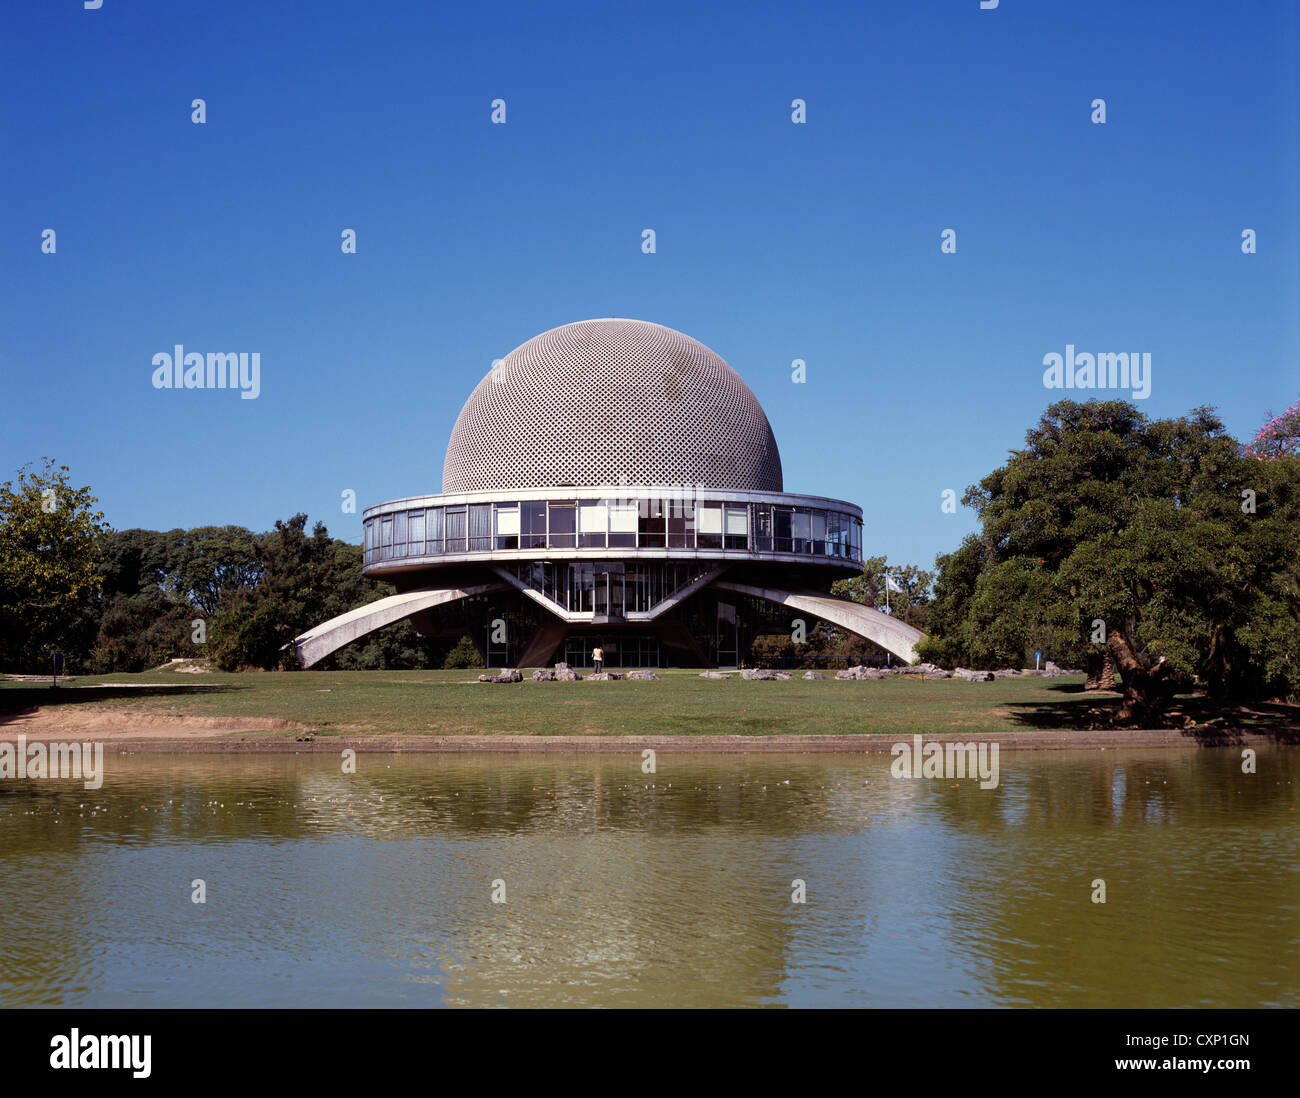 Planetario buenos aires fotografías e imágenes de alta resolución - Alamy